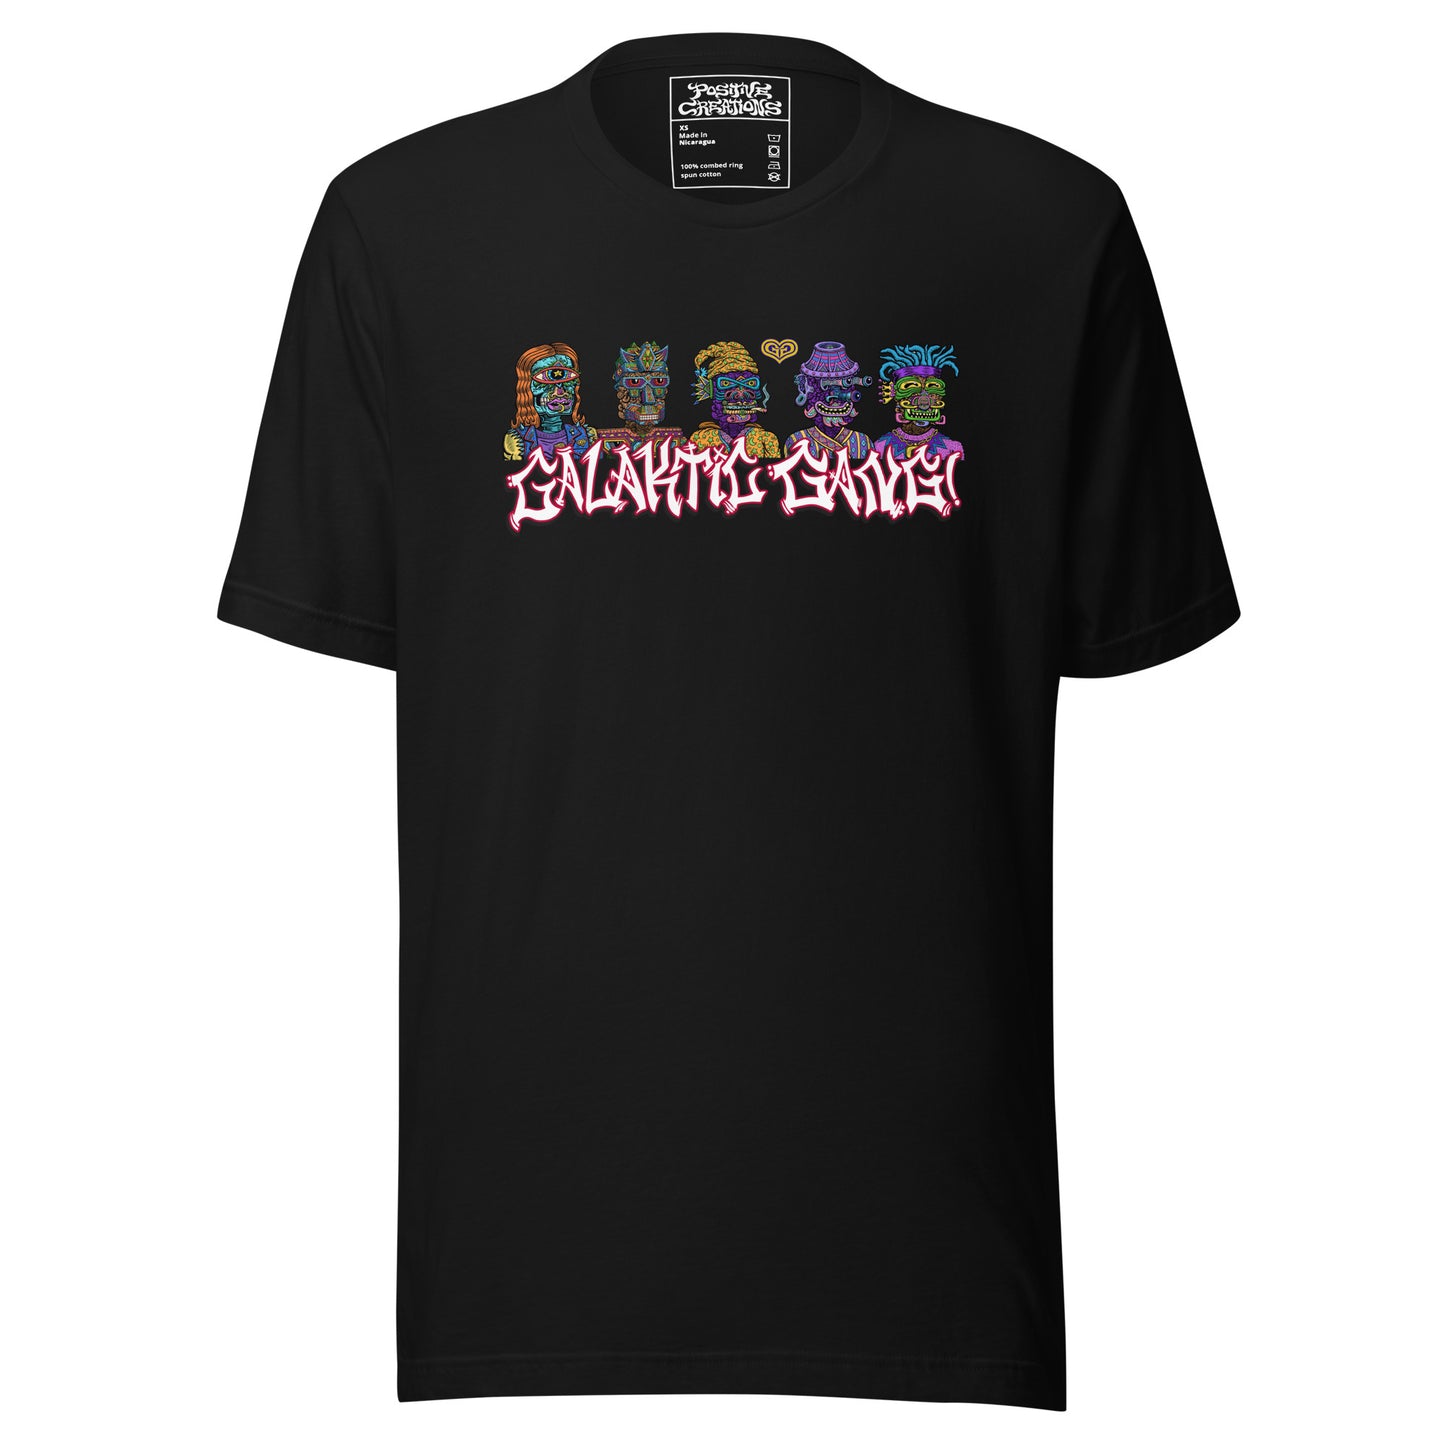 "Galaktic Gangsters" Cotton T-Shirt